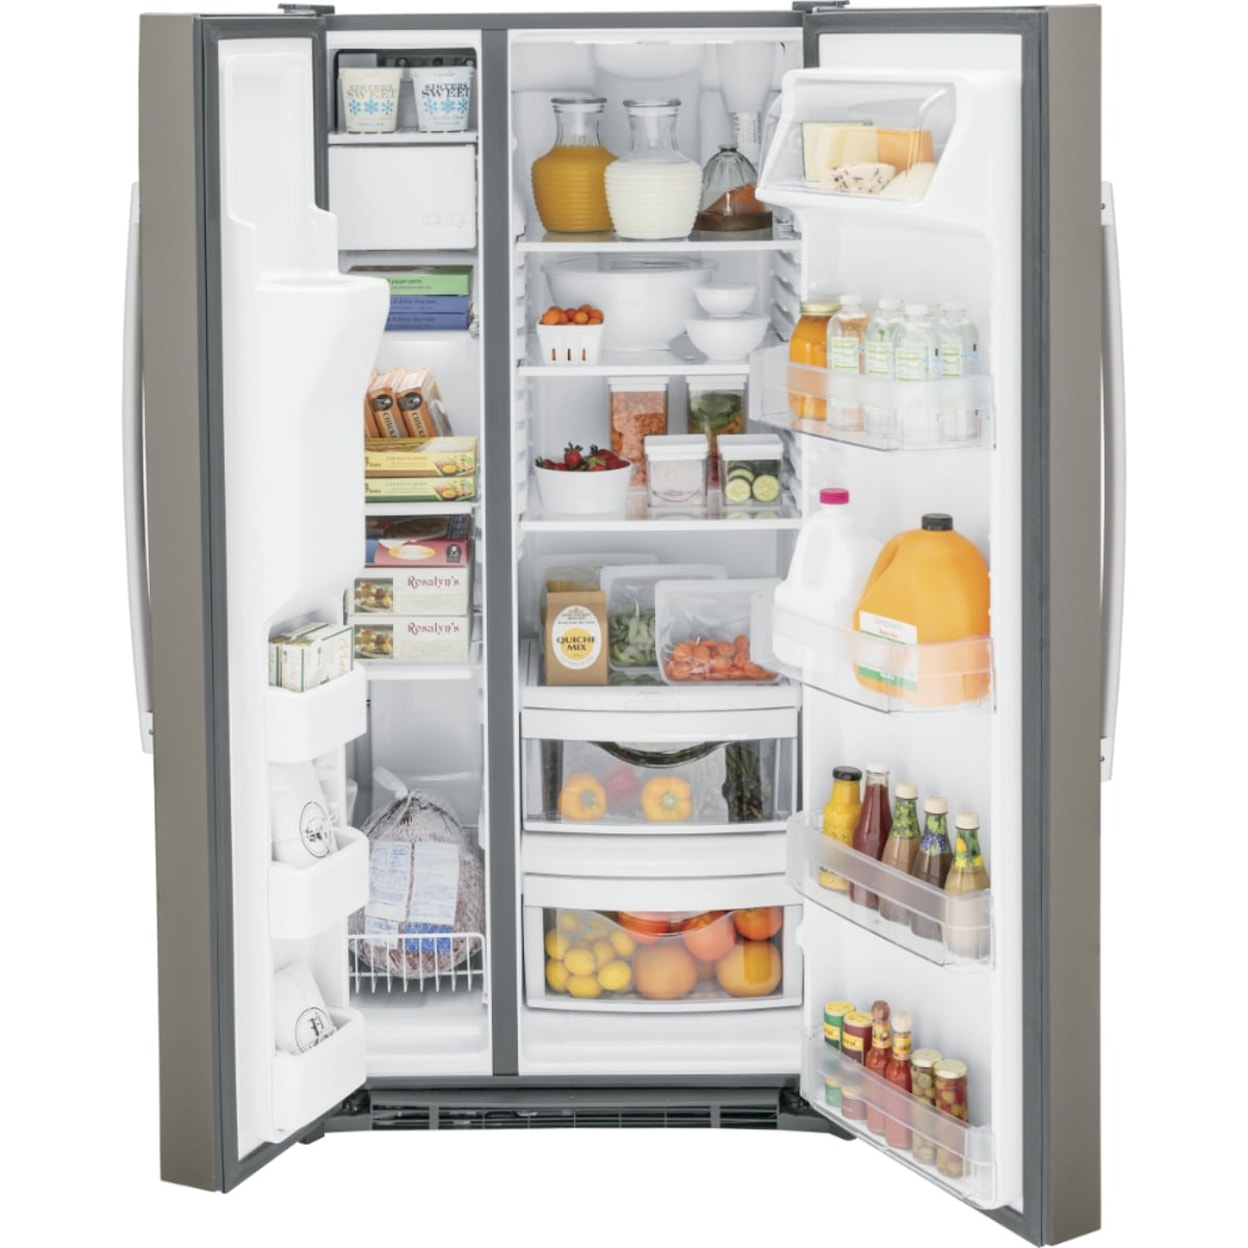 GE Appliances Refrigerators (Canada) Side-By-Side Refrigerator